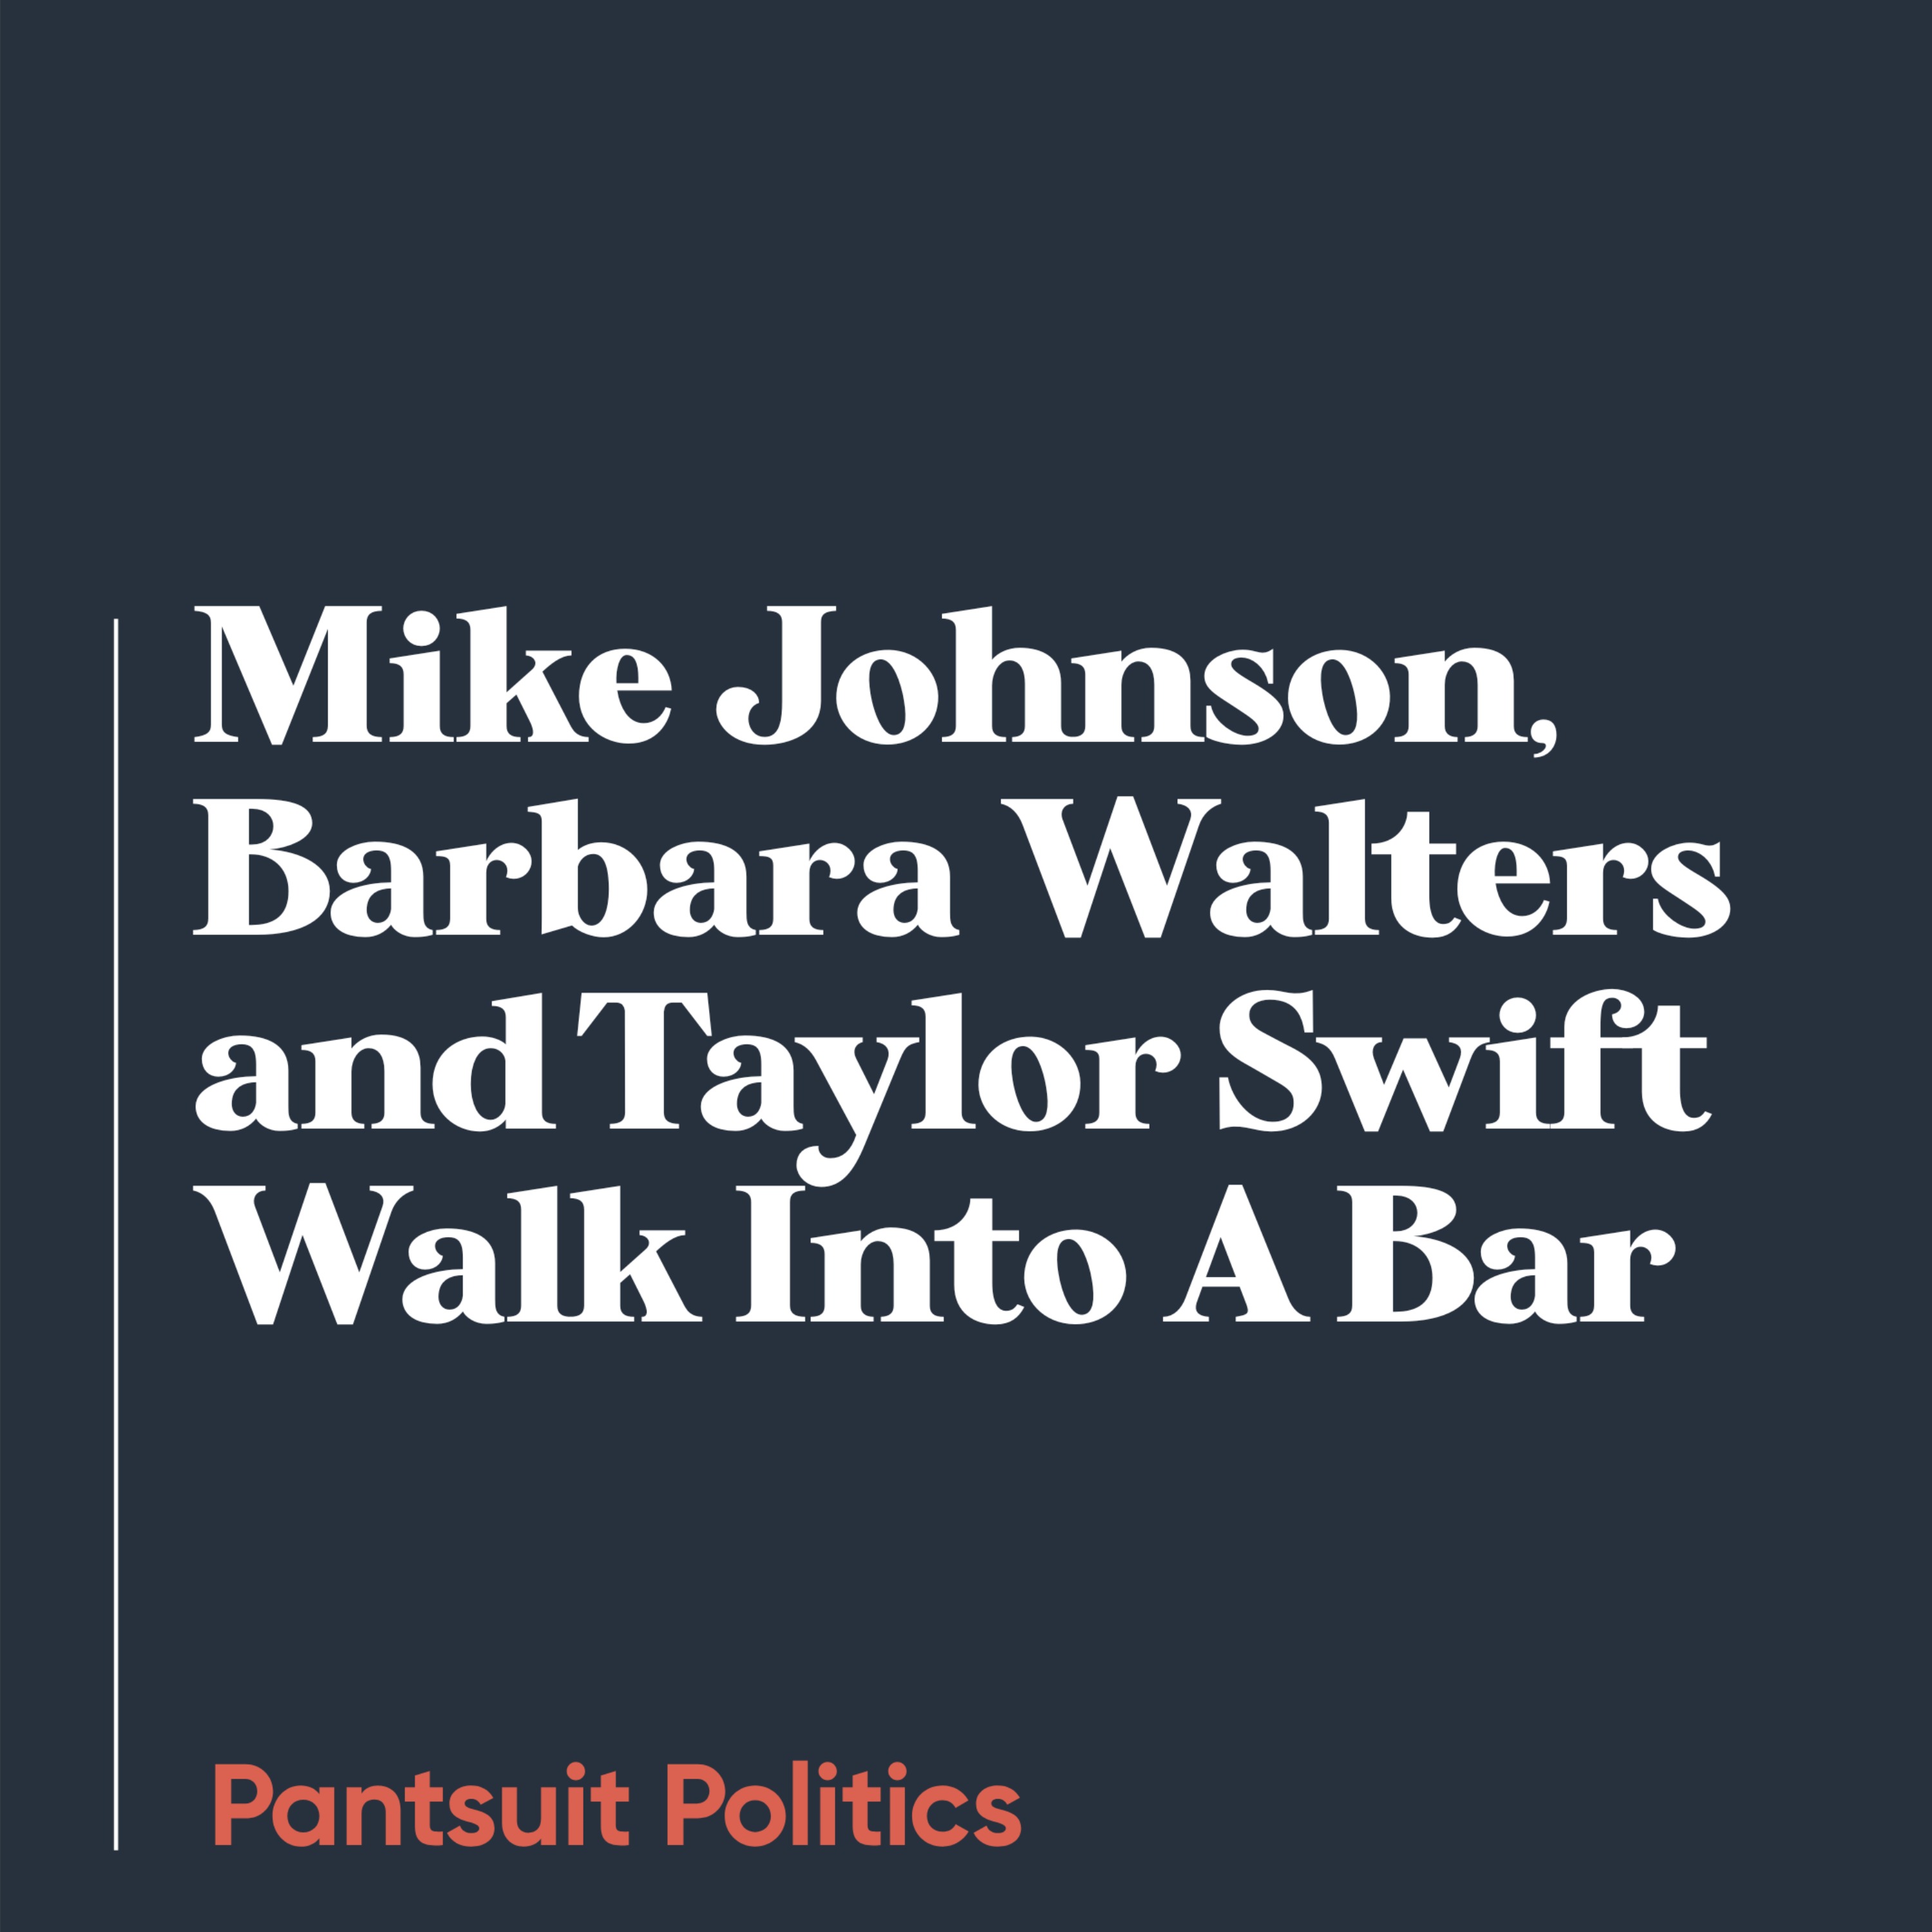 Mike Johnson, Barbara Walters, and Taylor Swift Walk Into A Bar